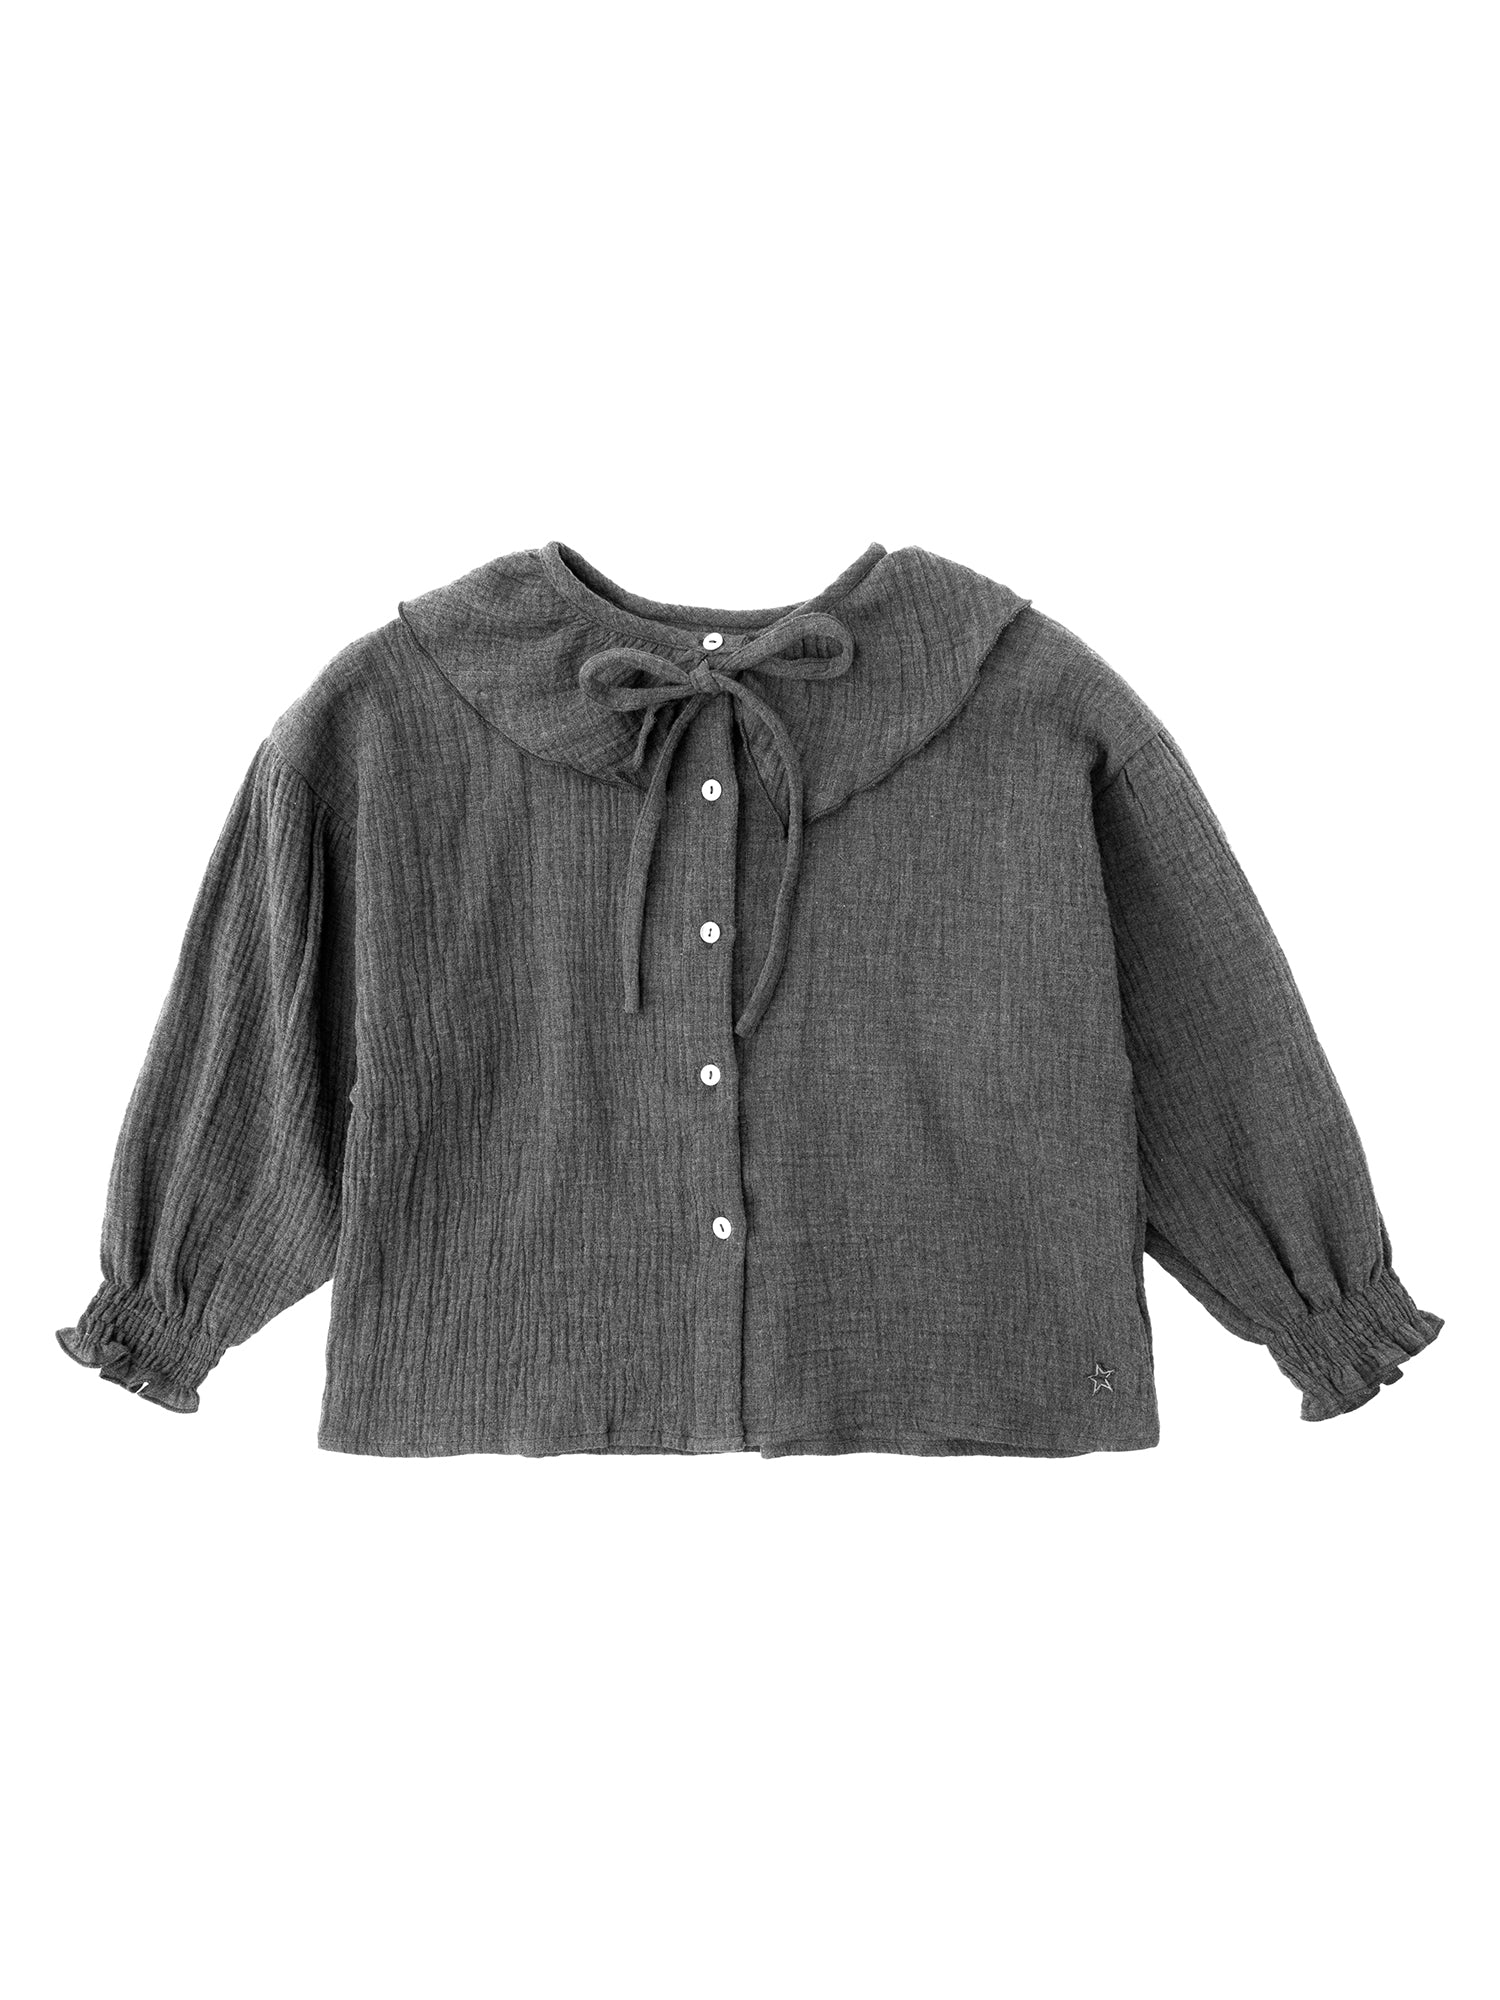 Tocoto Vintage Bambula Blouse - Shirts & Tops